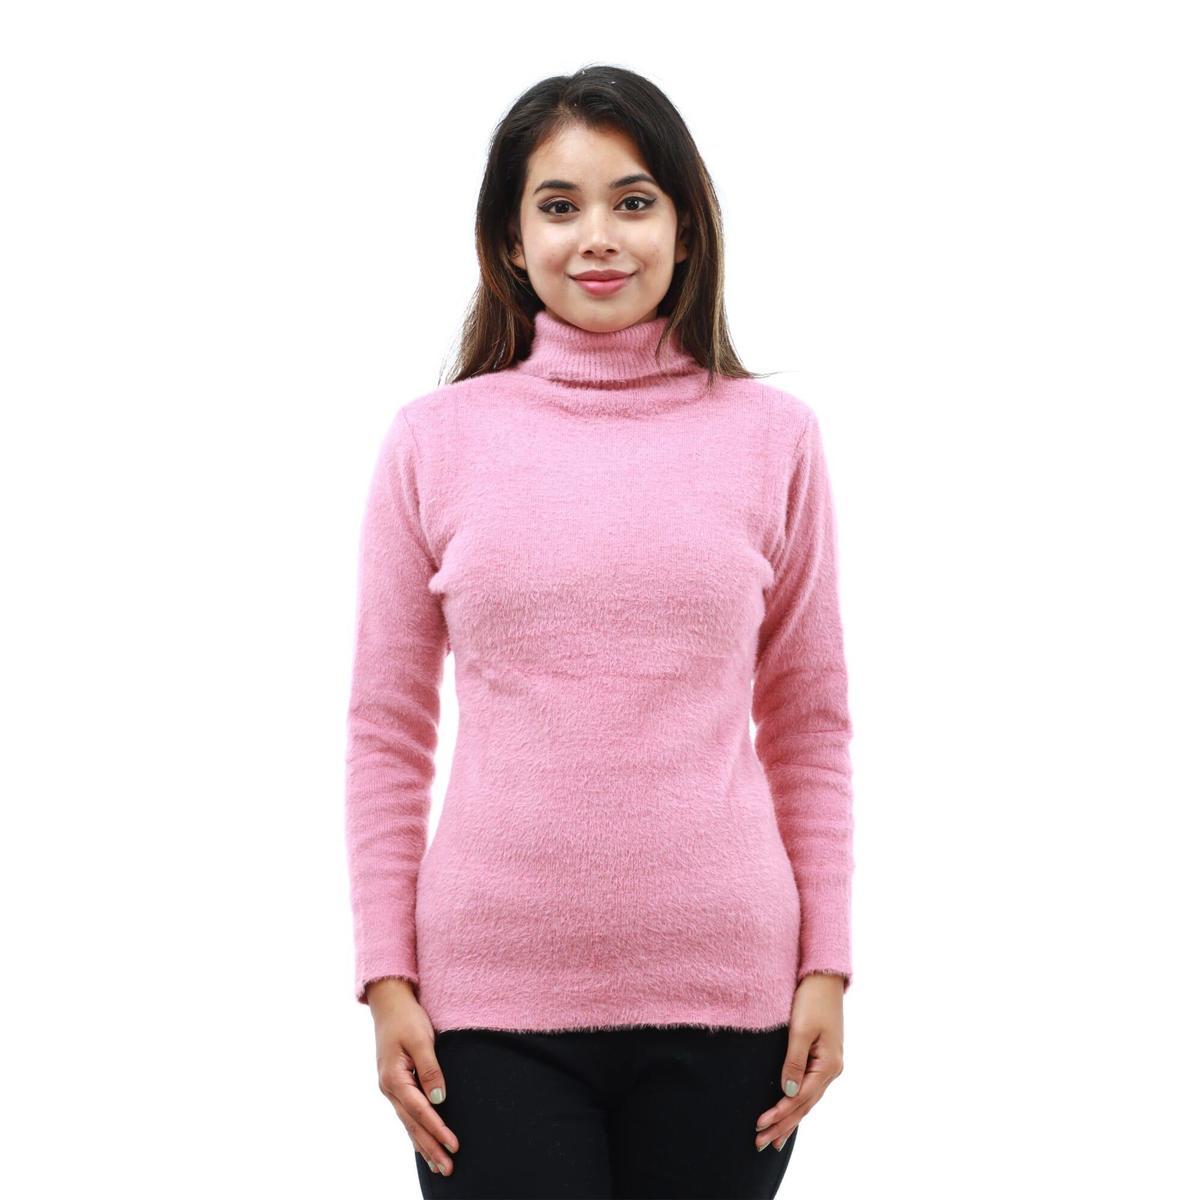 pink high neck t shirt full sleeves for women